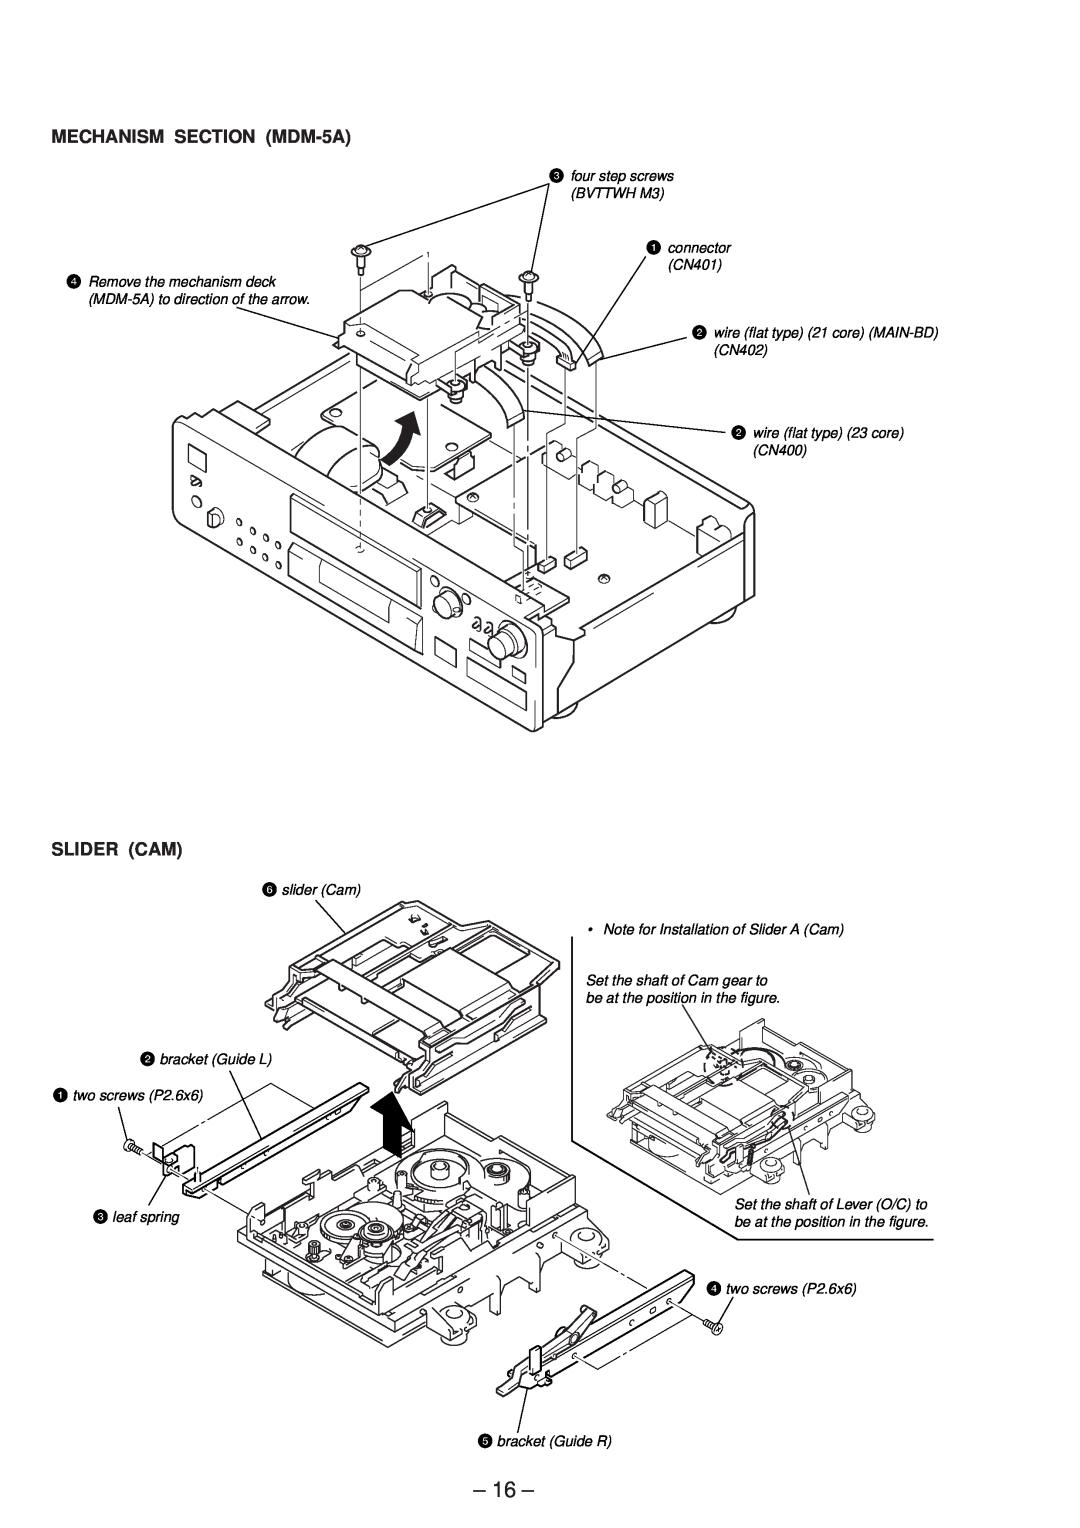 Sony MDS-JB920 service manual 16, MECHANISM SECTION MDM-5A, Slider Cam 